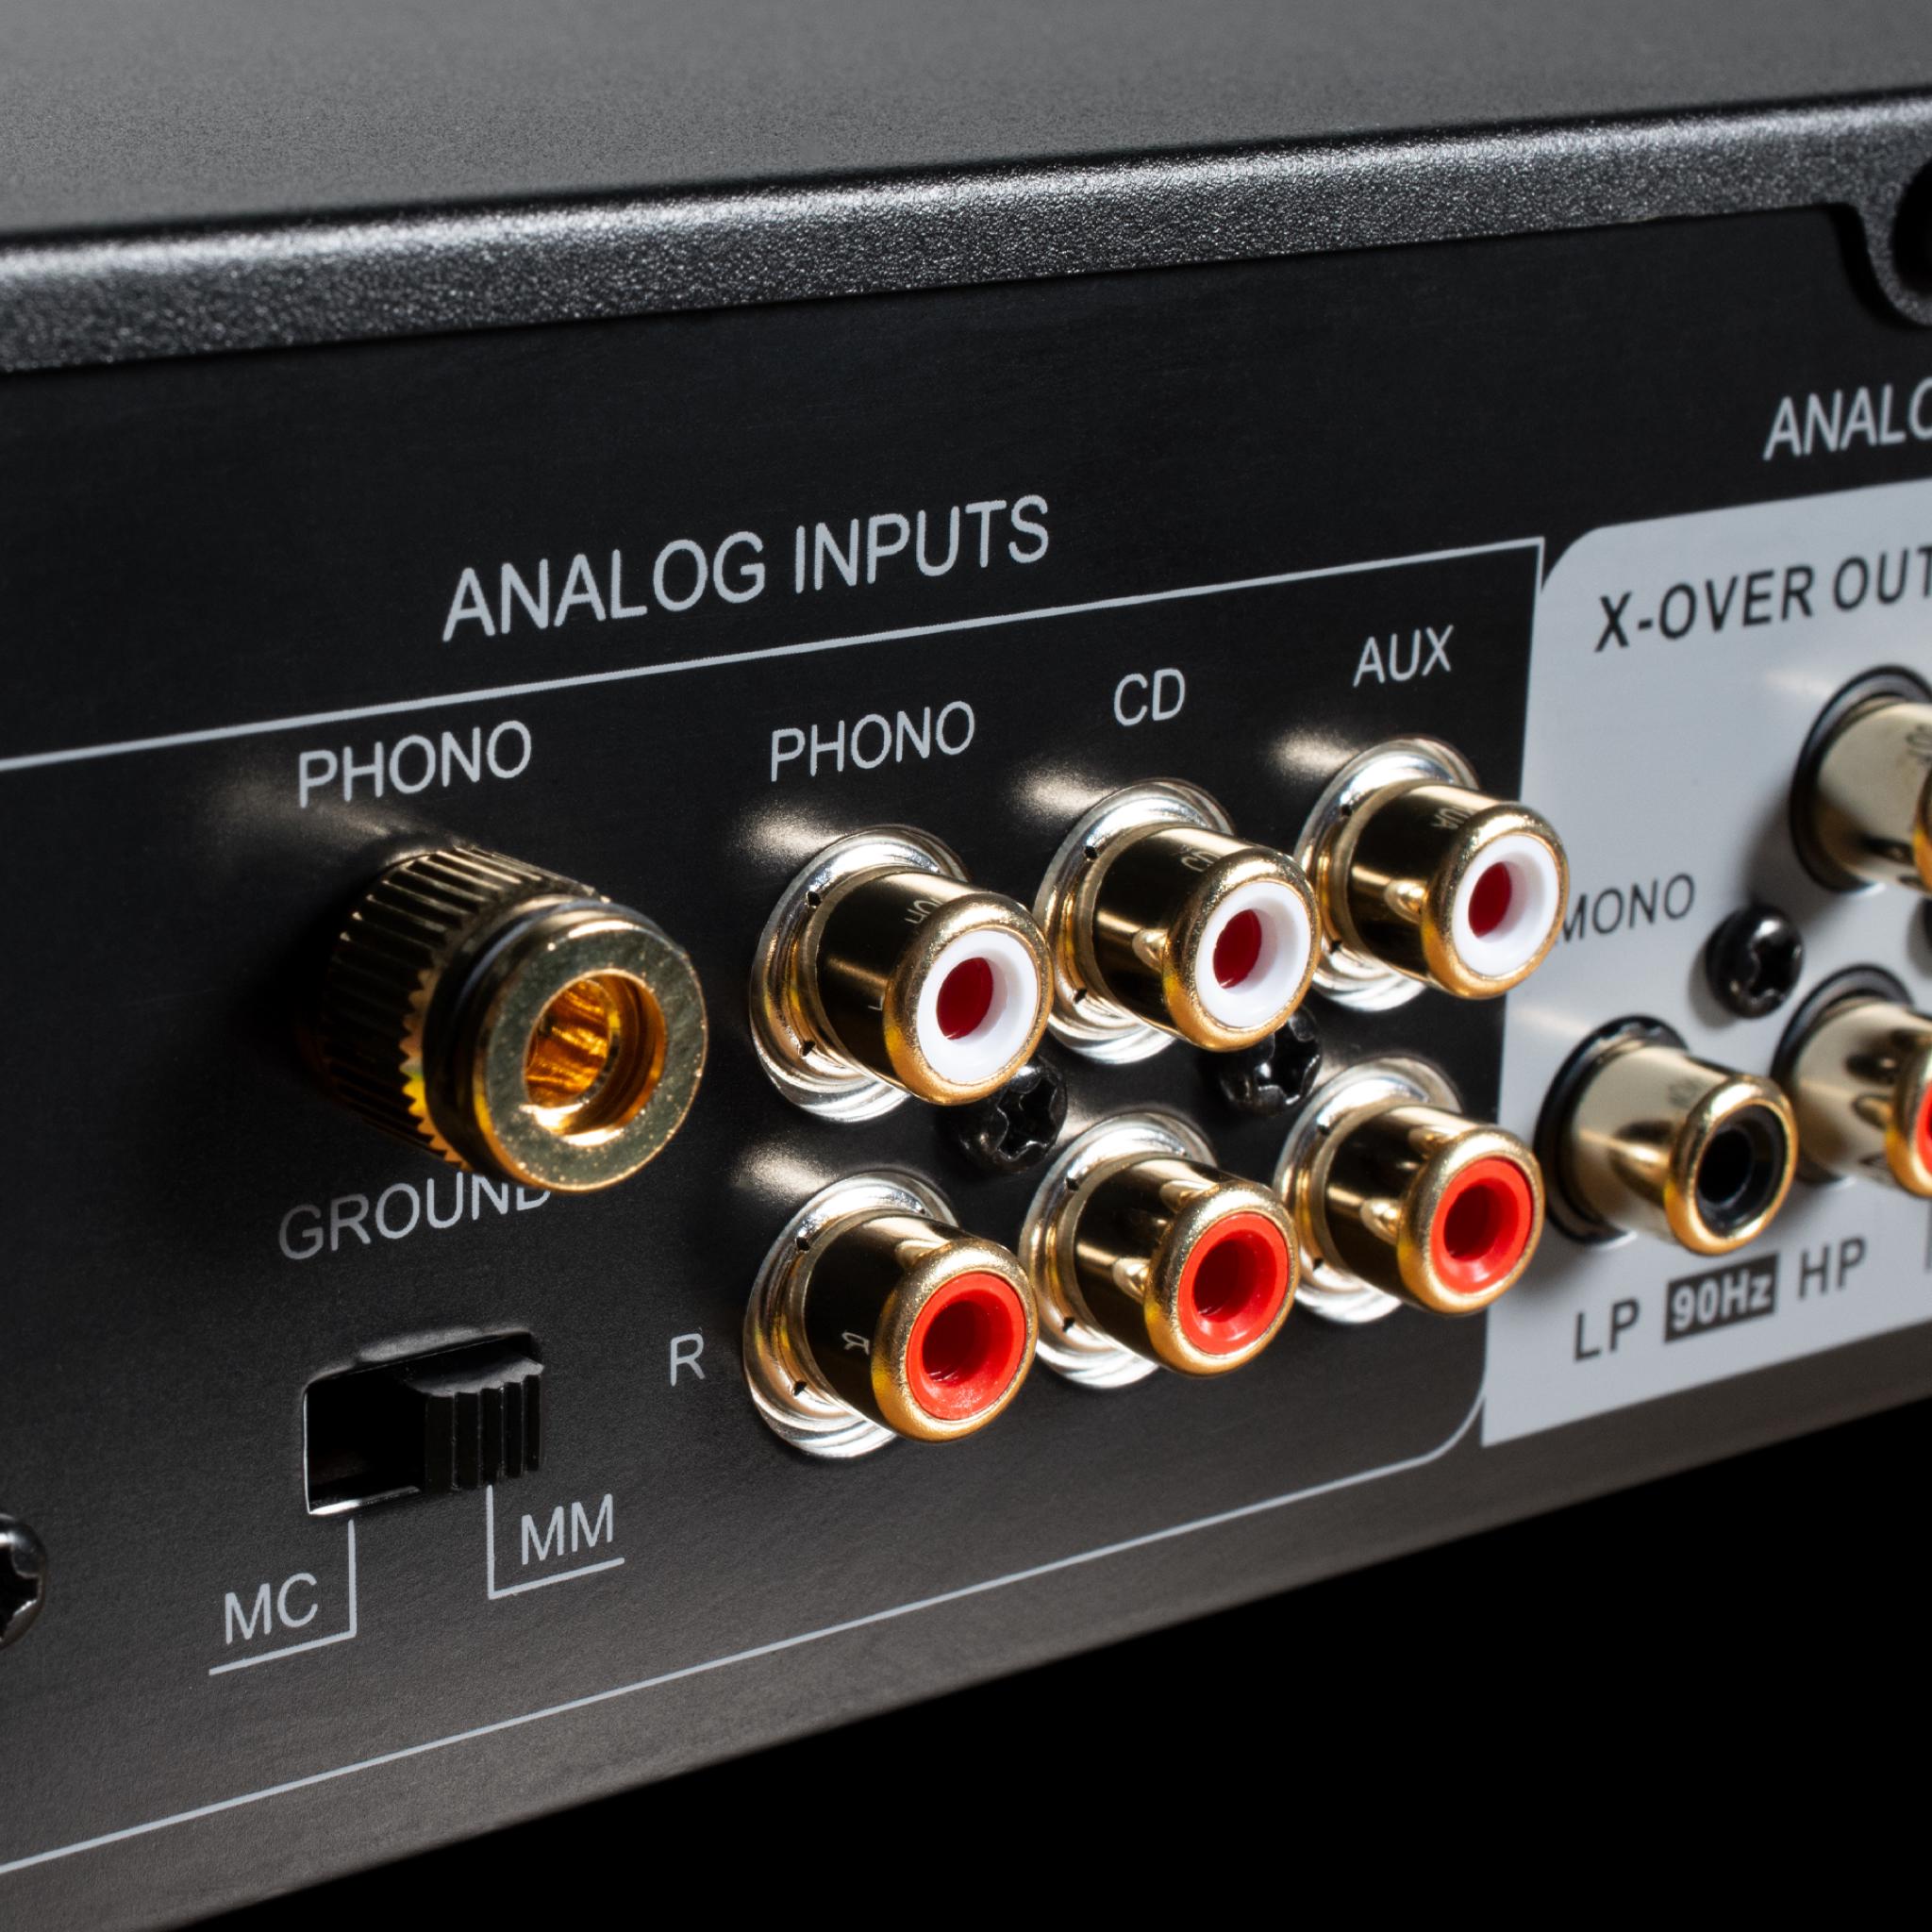 Emotiva BasX PT1 - Stereo Preamplifier/DAC/Tuner - AVStore